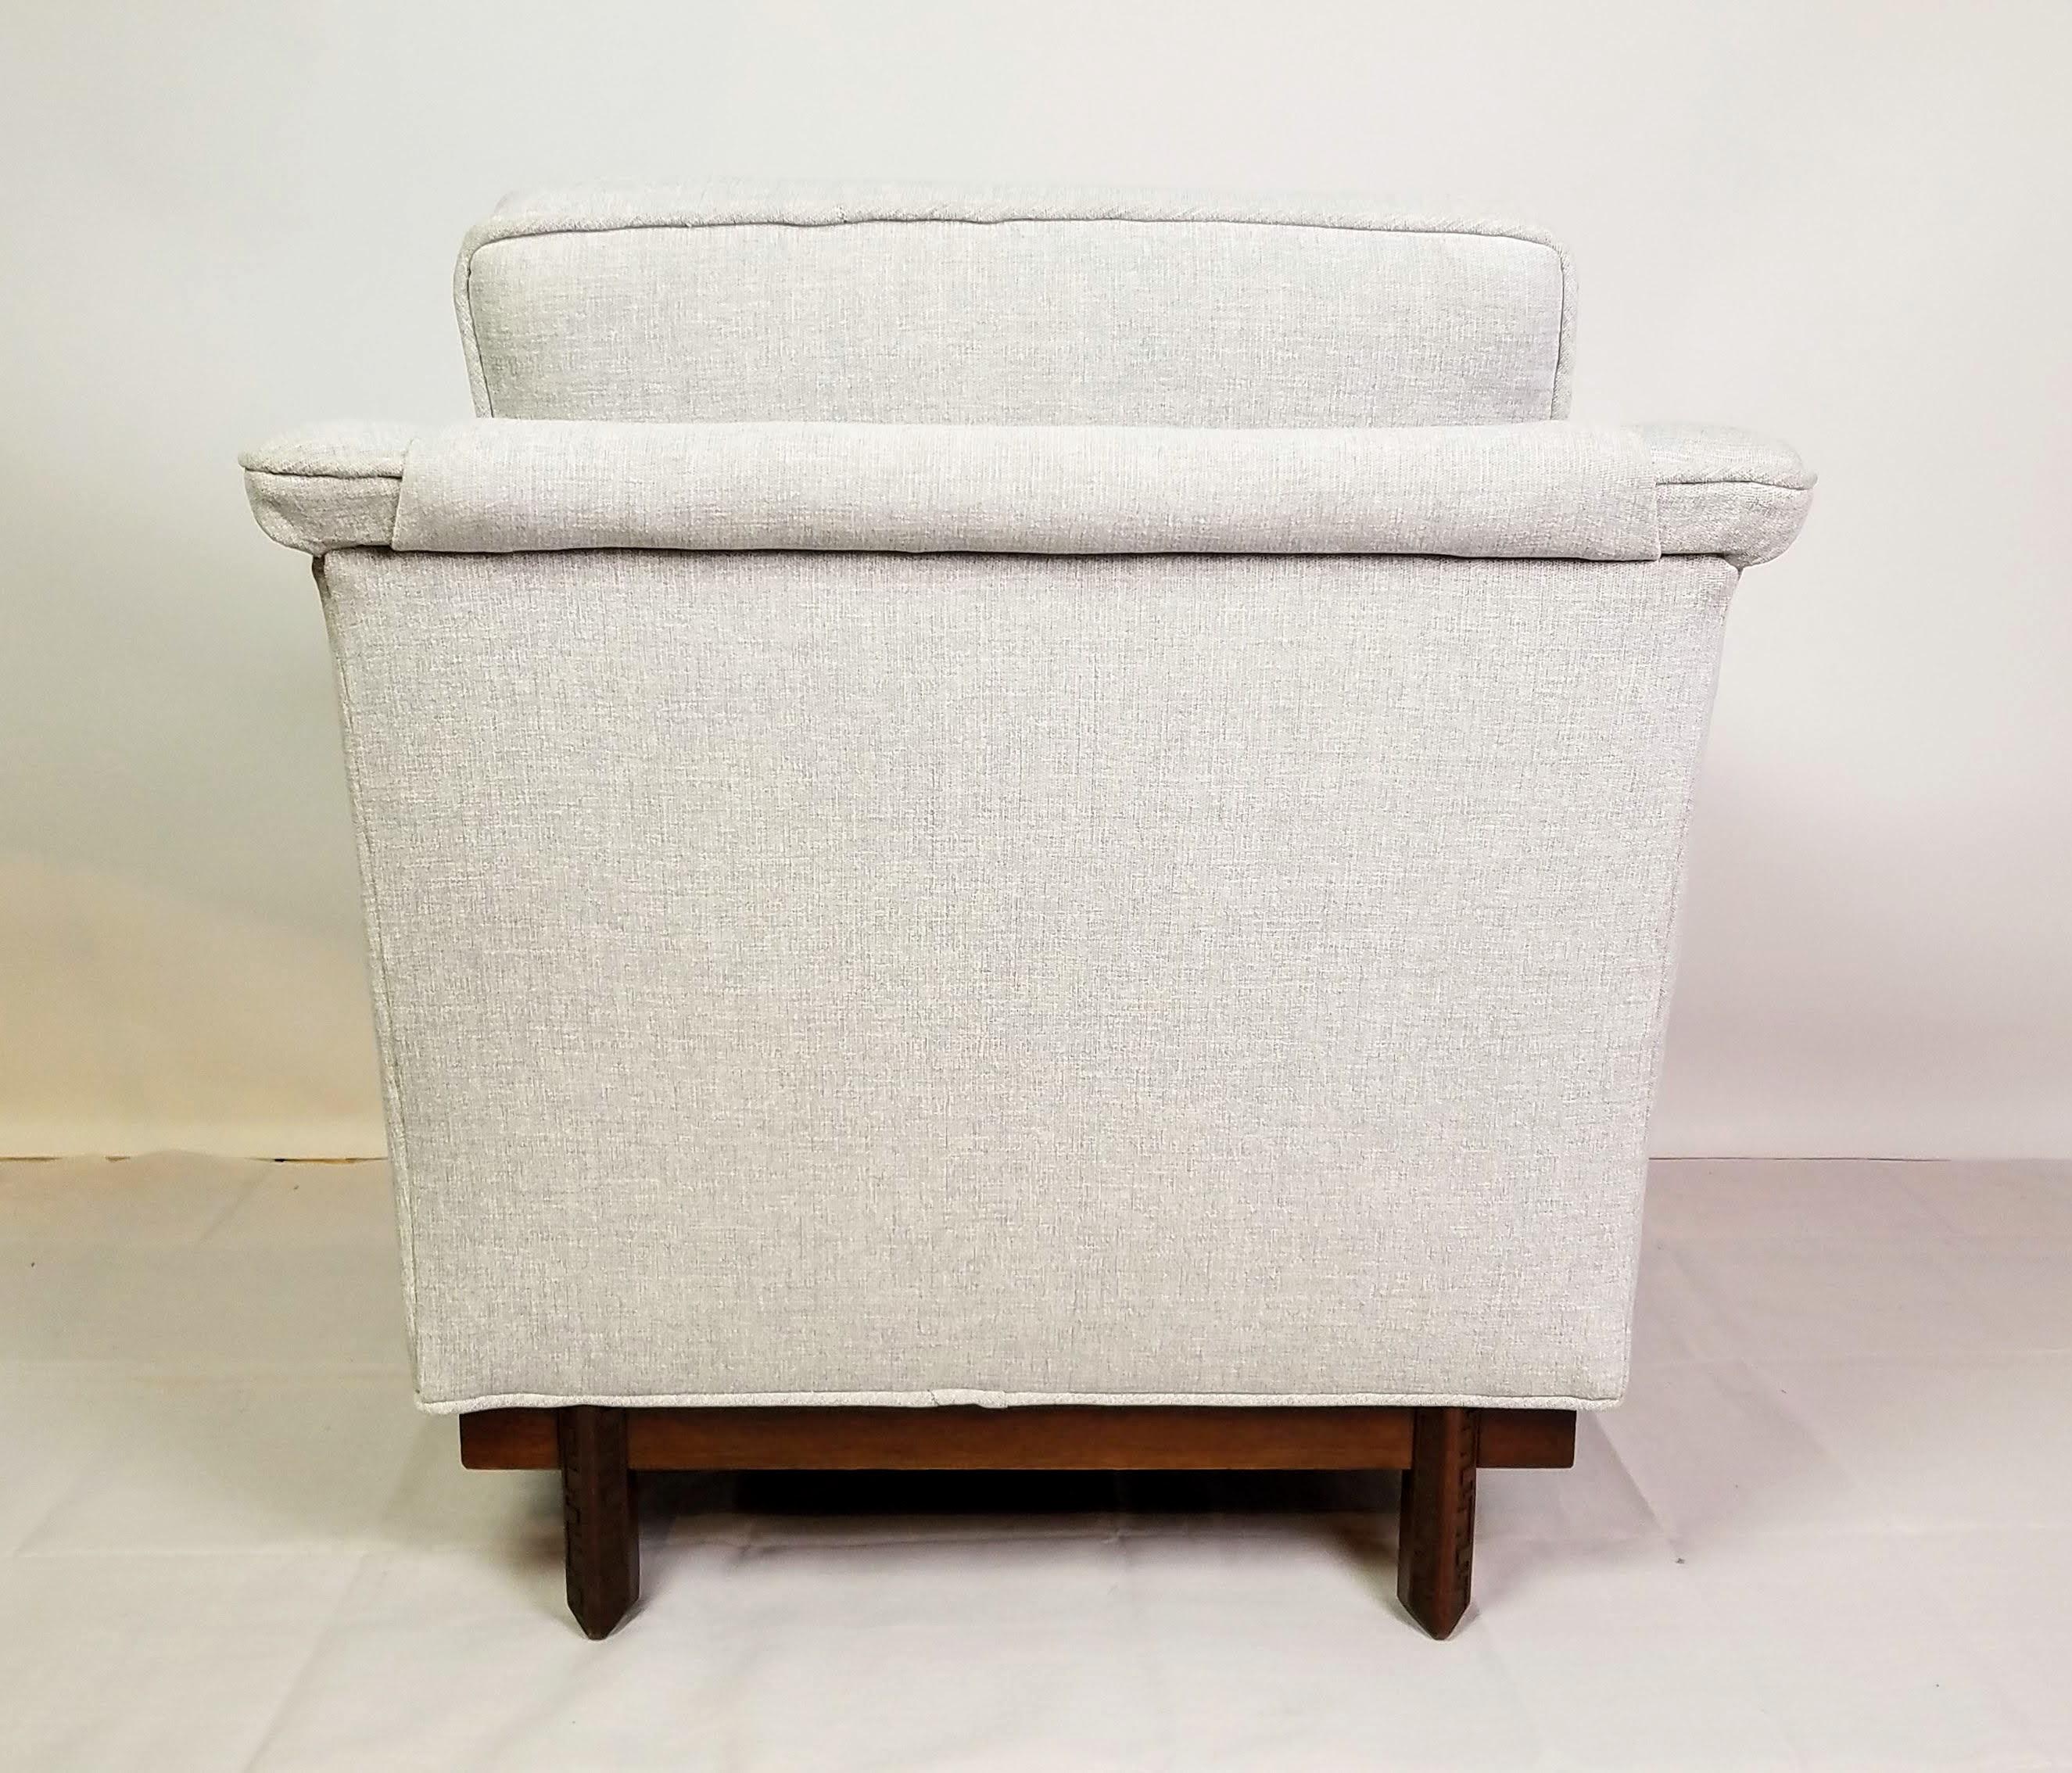 20th Century Frank Lloyd Wright Mahogany Lounge Chair Heritage Henredon Taliesin Line 1955/56 For Sale